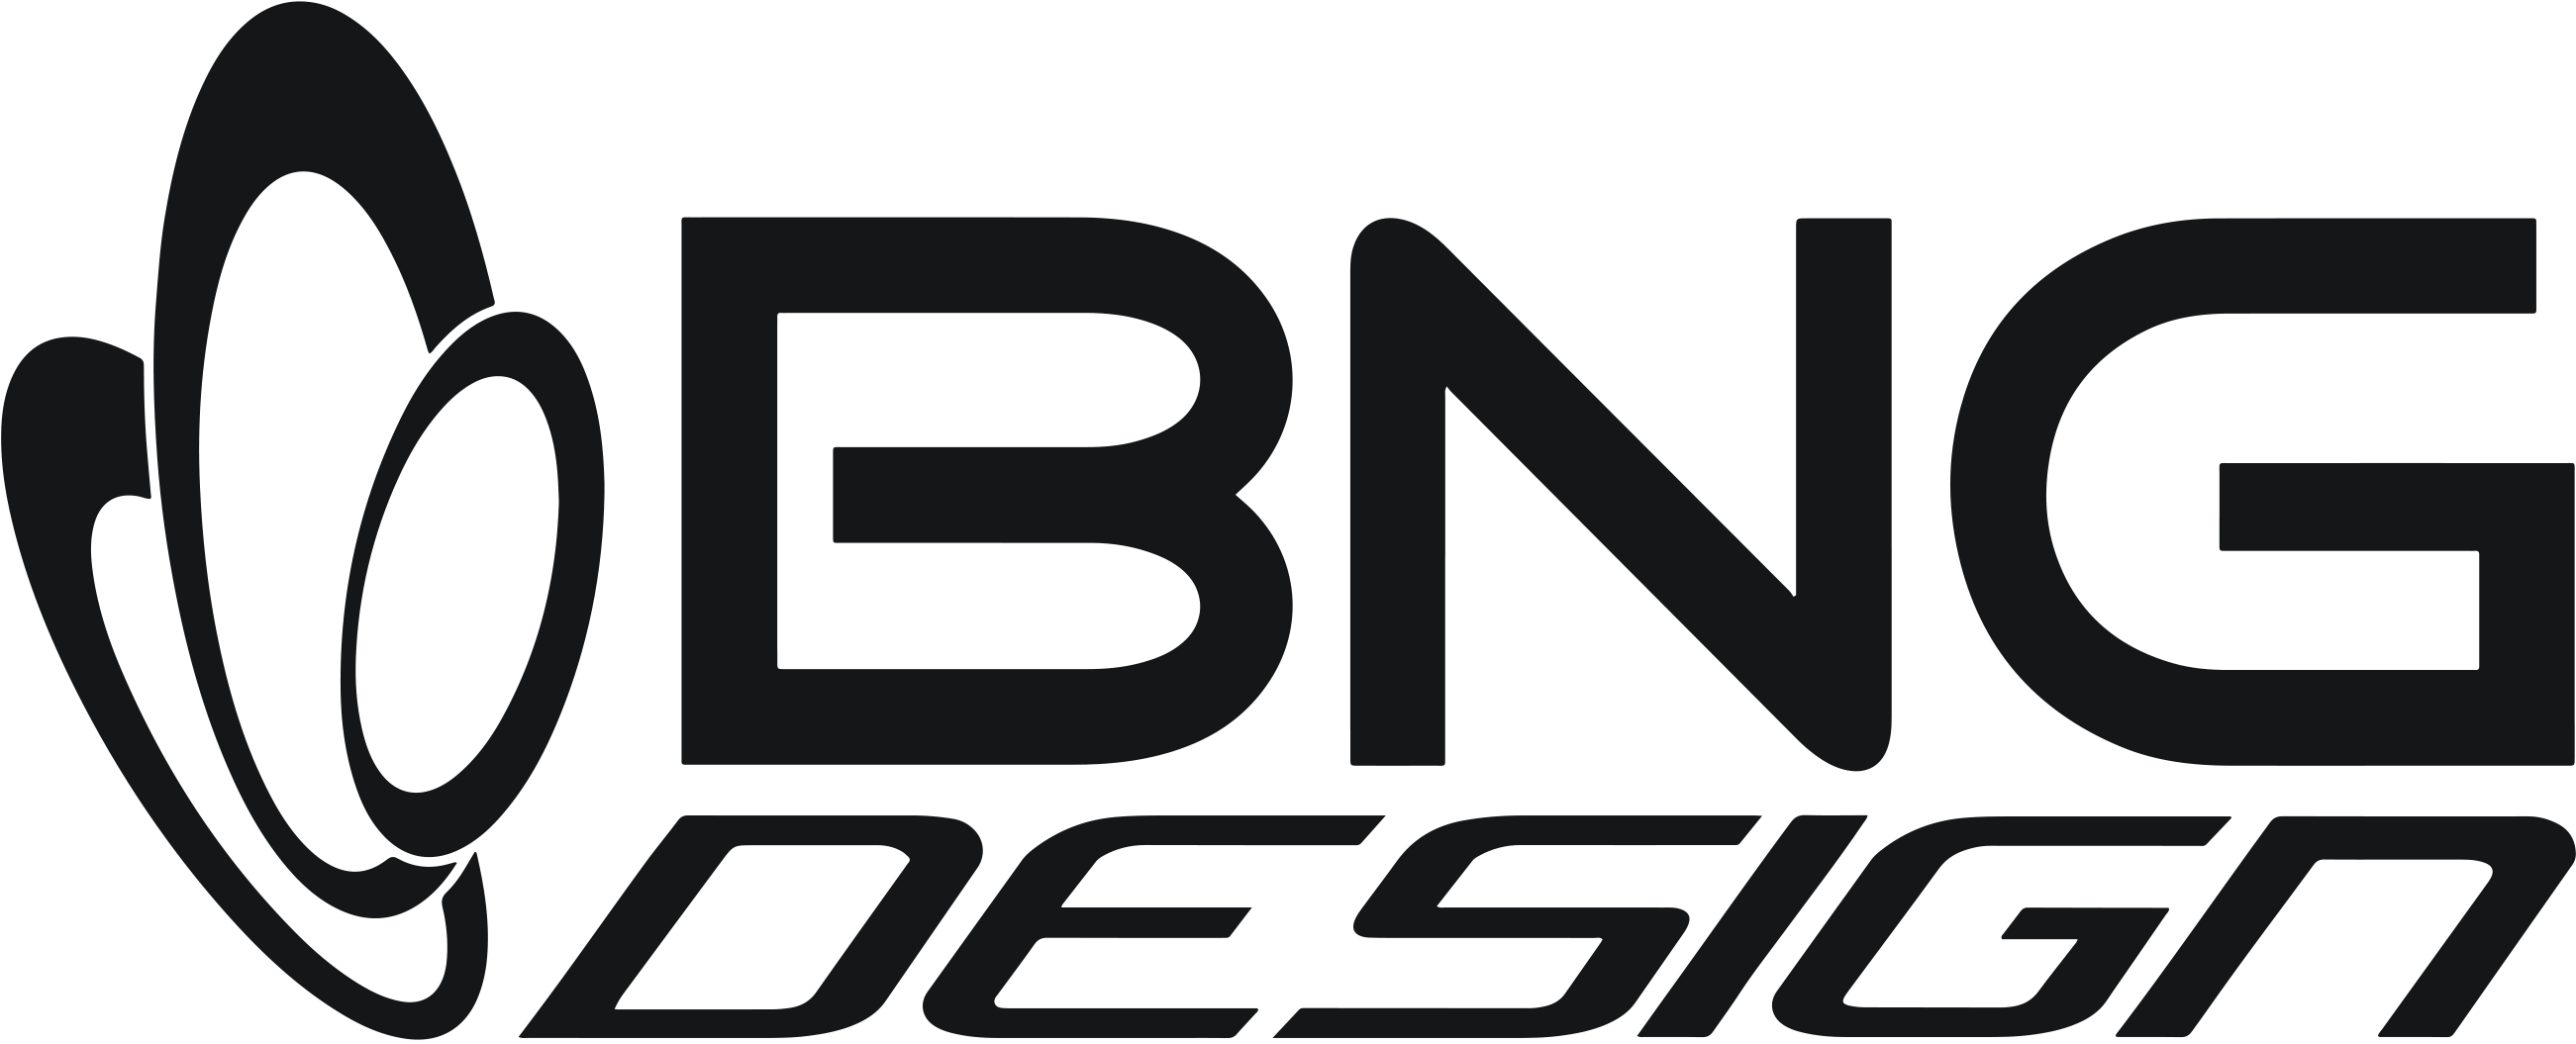 (c) Bngdesign.net